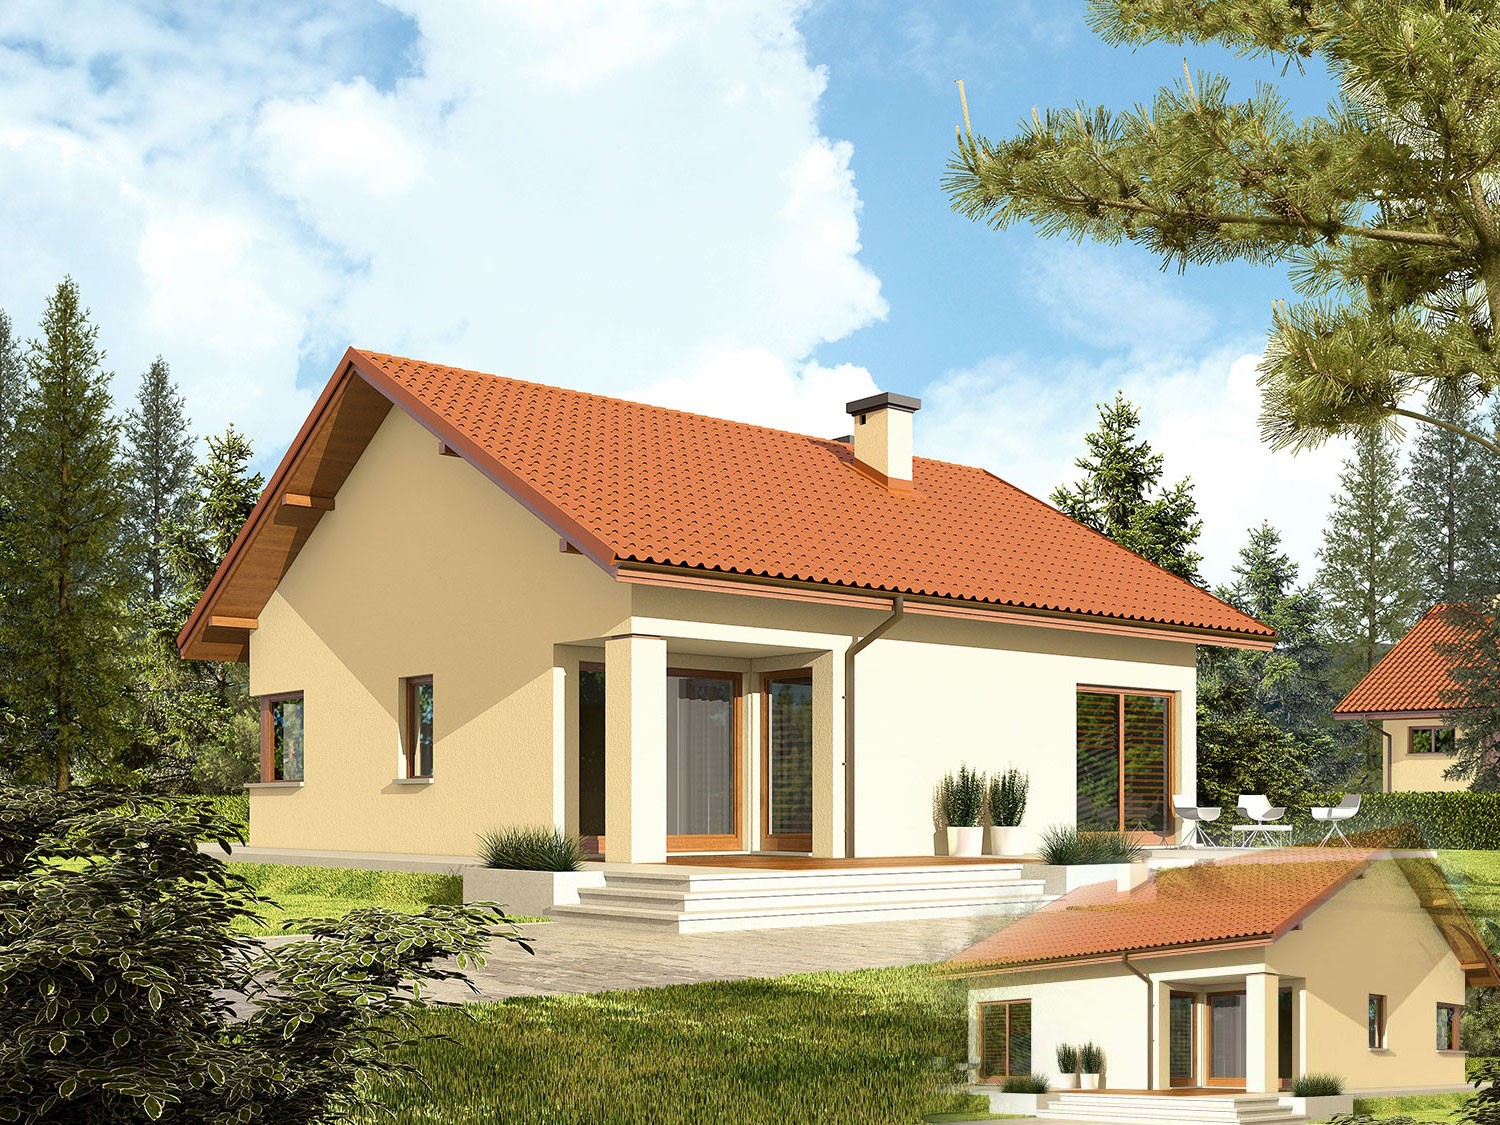 Maison ossature bois kit / plan de maison "TORI III ECONOMIC WA" 80 m2 RT 2020